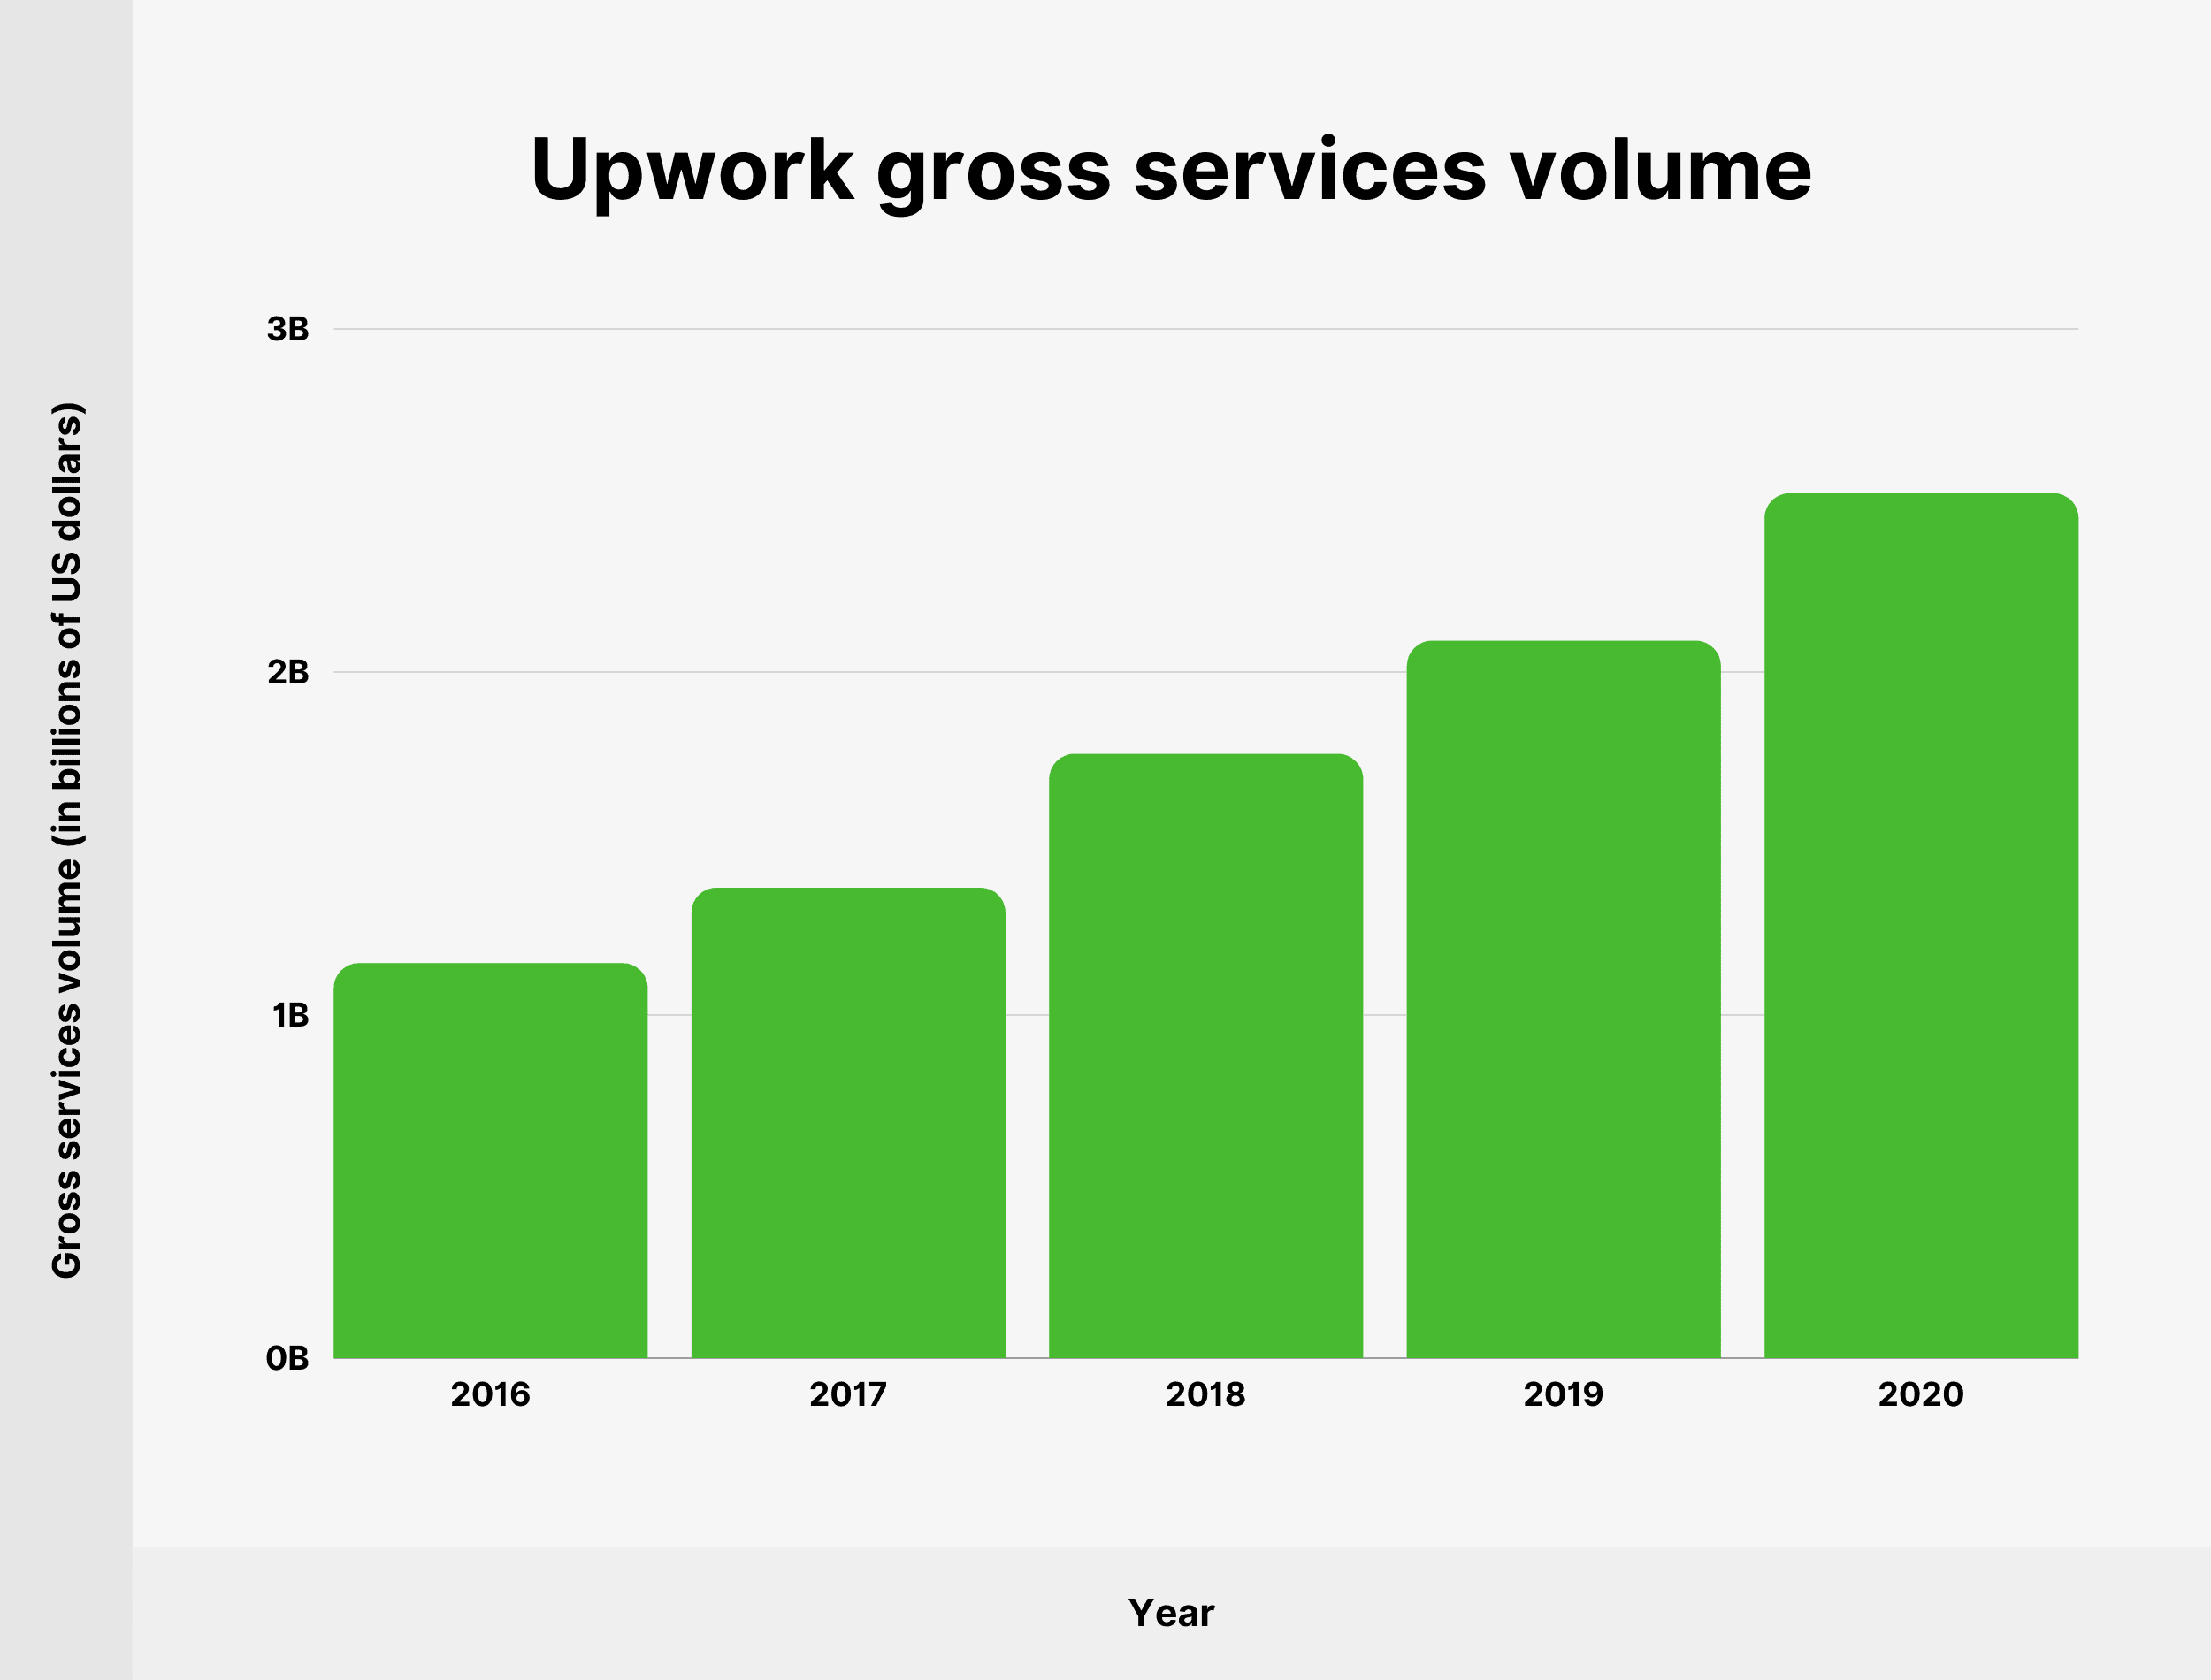 Upwork gross services volume